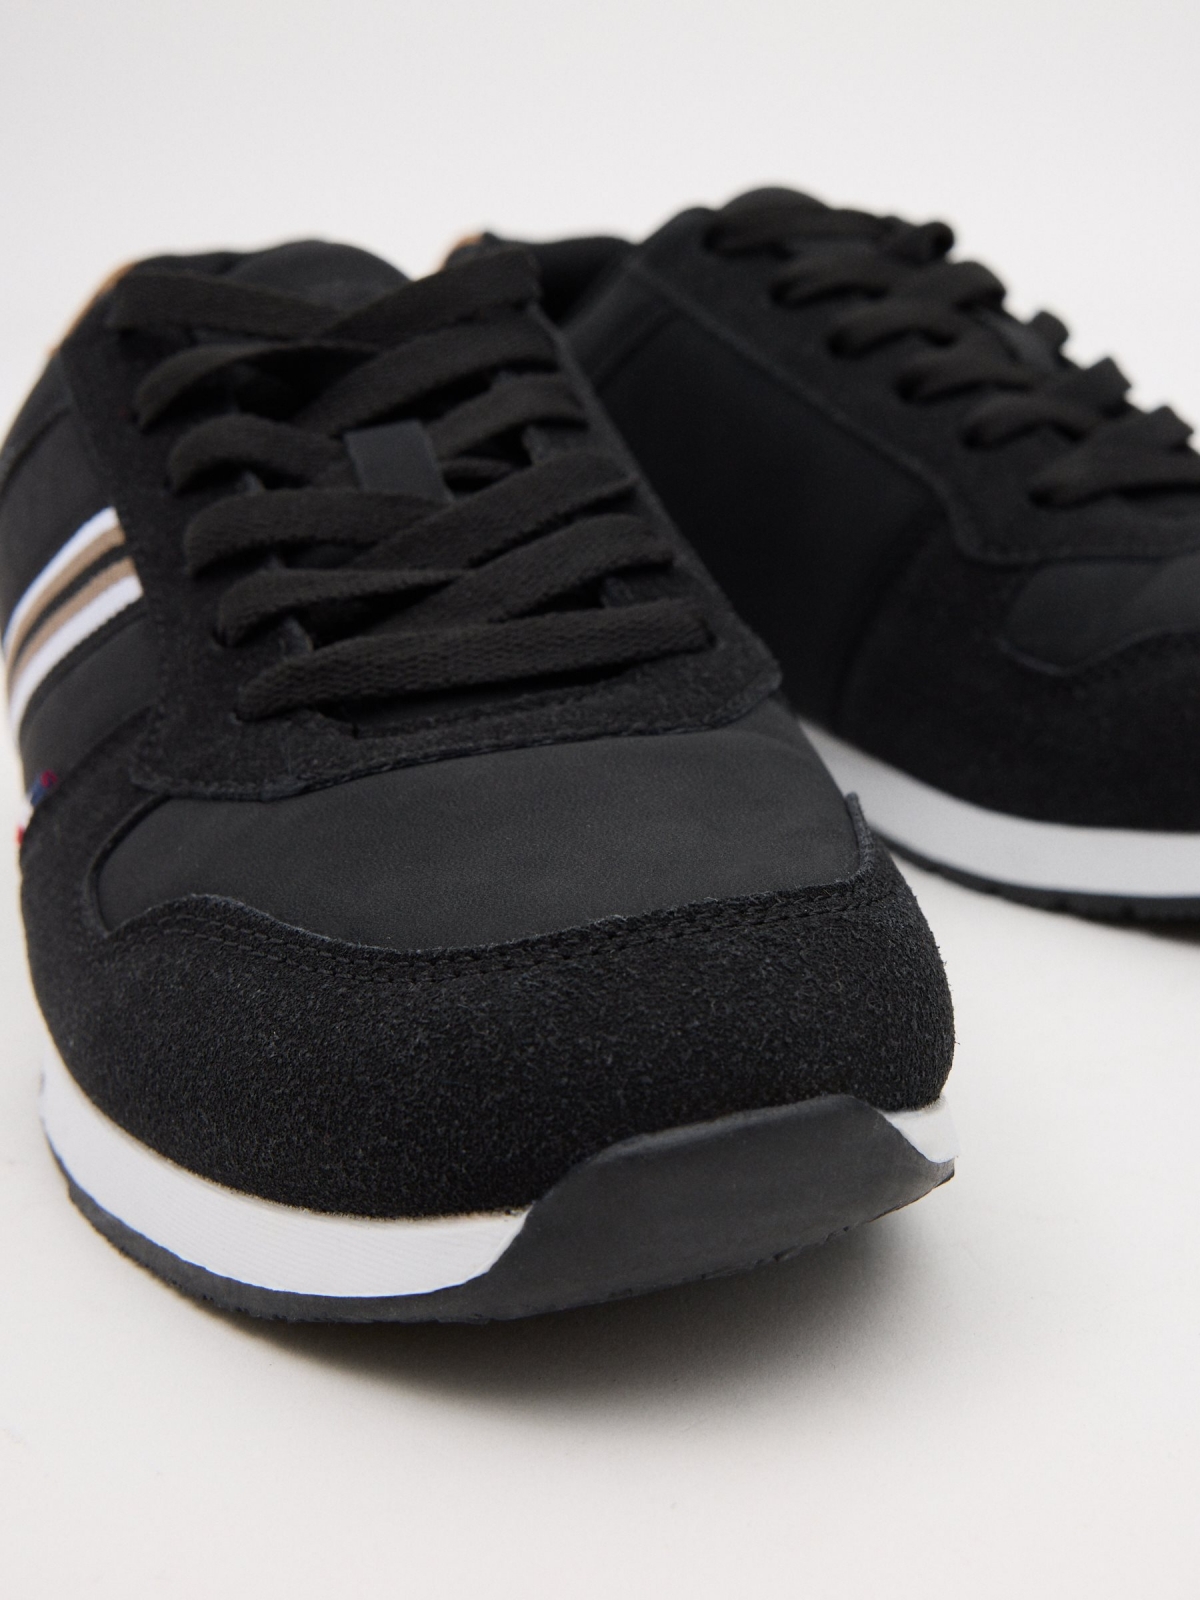 Combined casual sneaker black/beige detail view